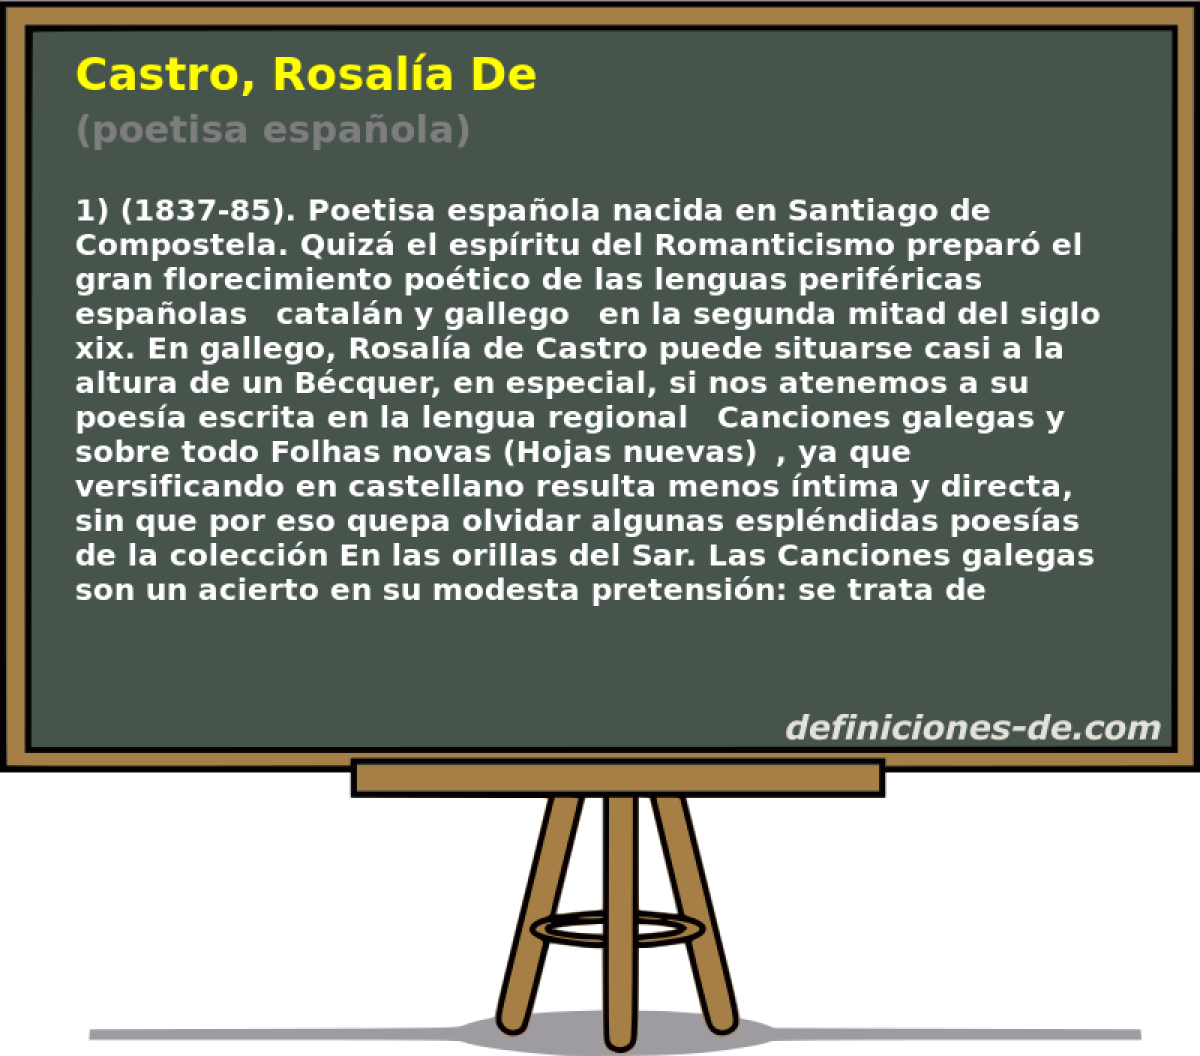 Castro, Rosala De (poetisa espaola)